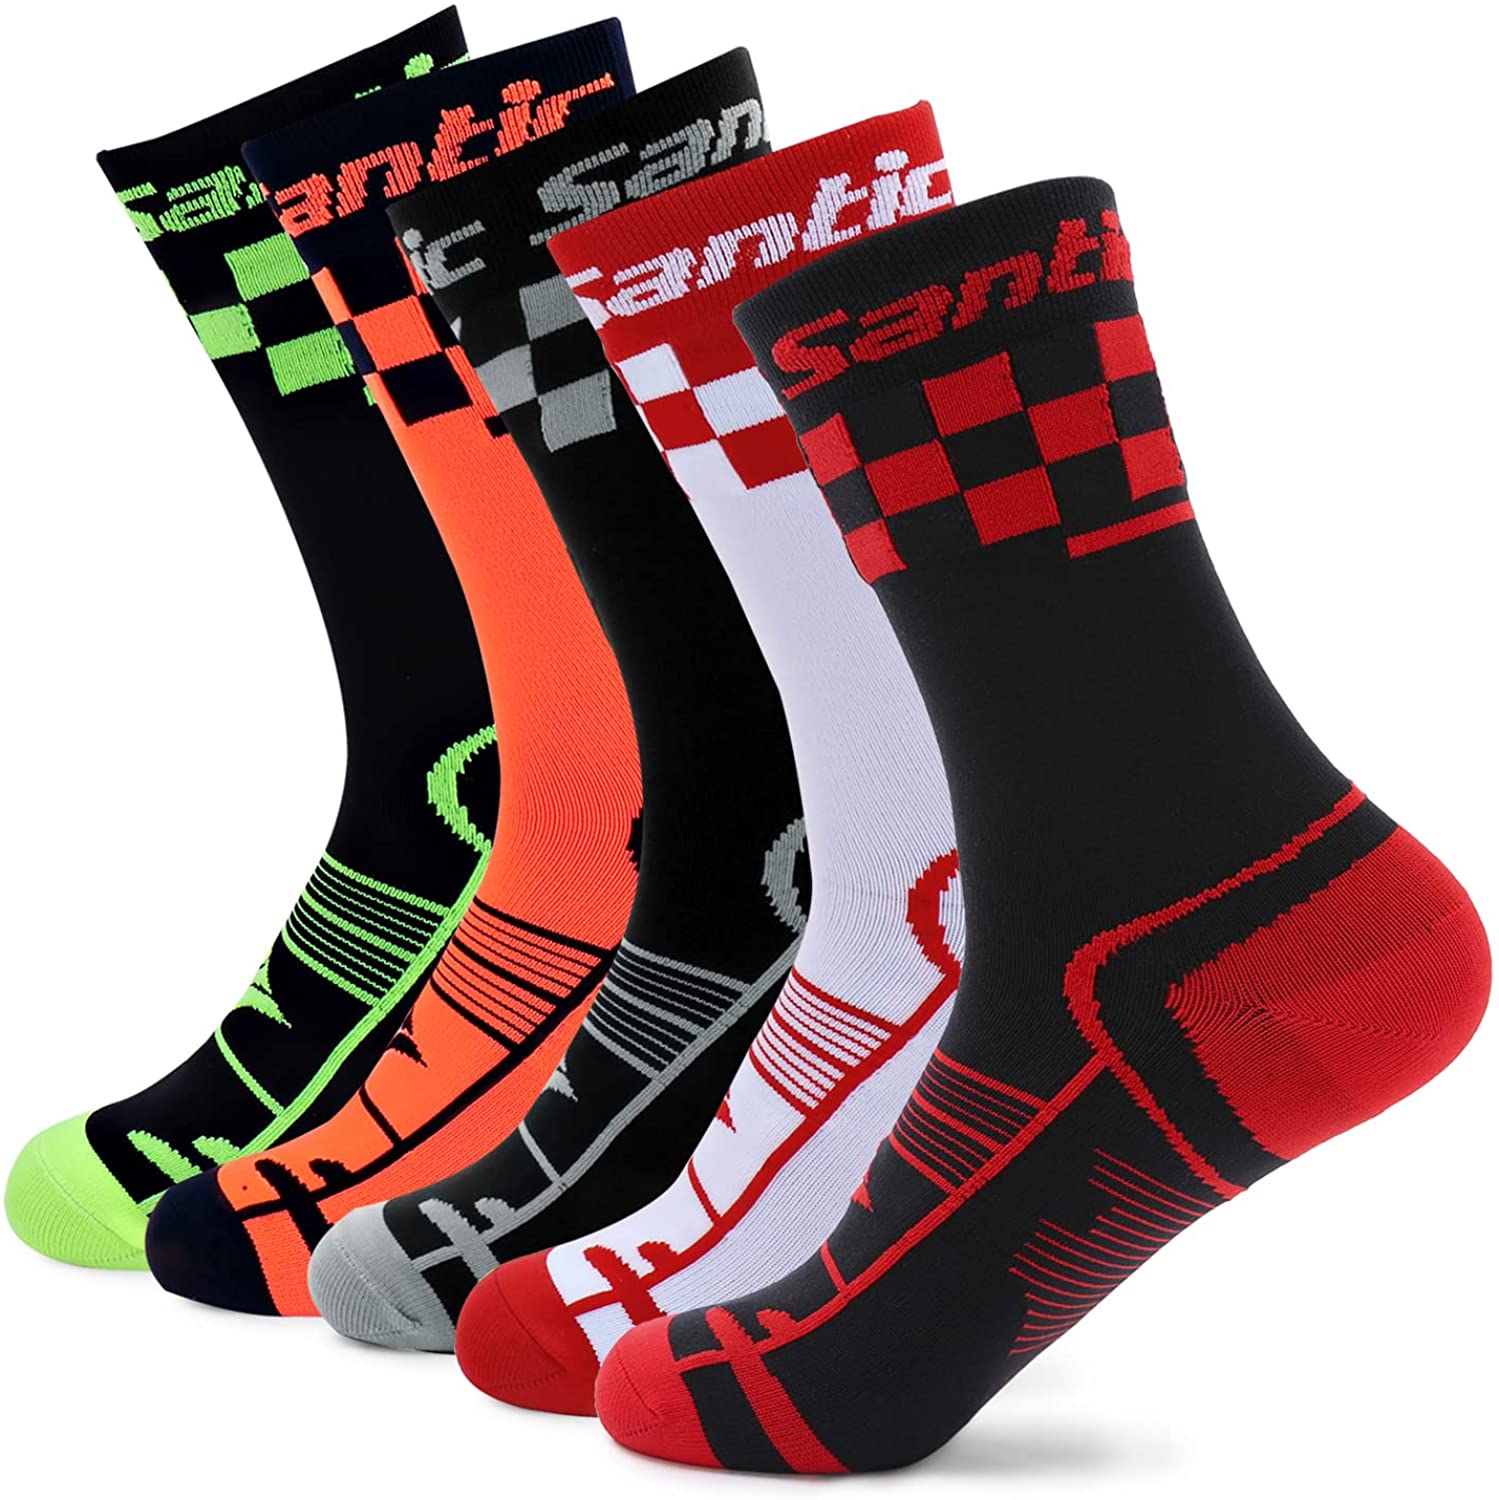 SANTIC Bicycle Bicycle Socks Antibacterial Comfortable Running Sports Bike Socks 